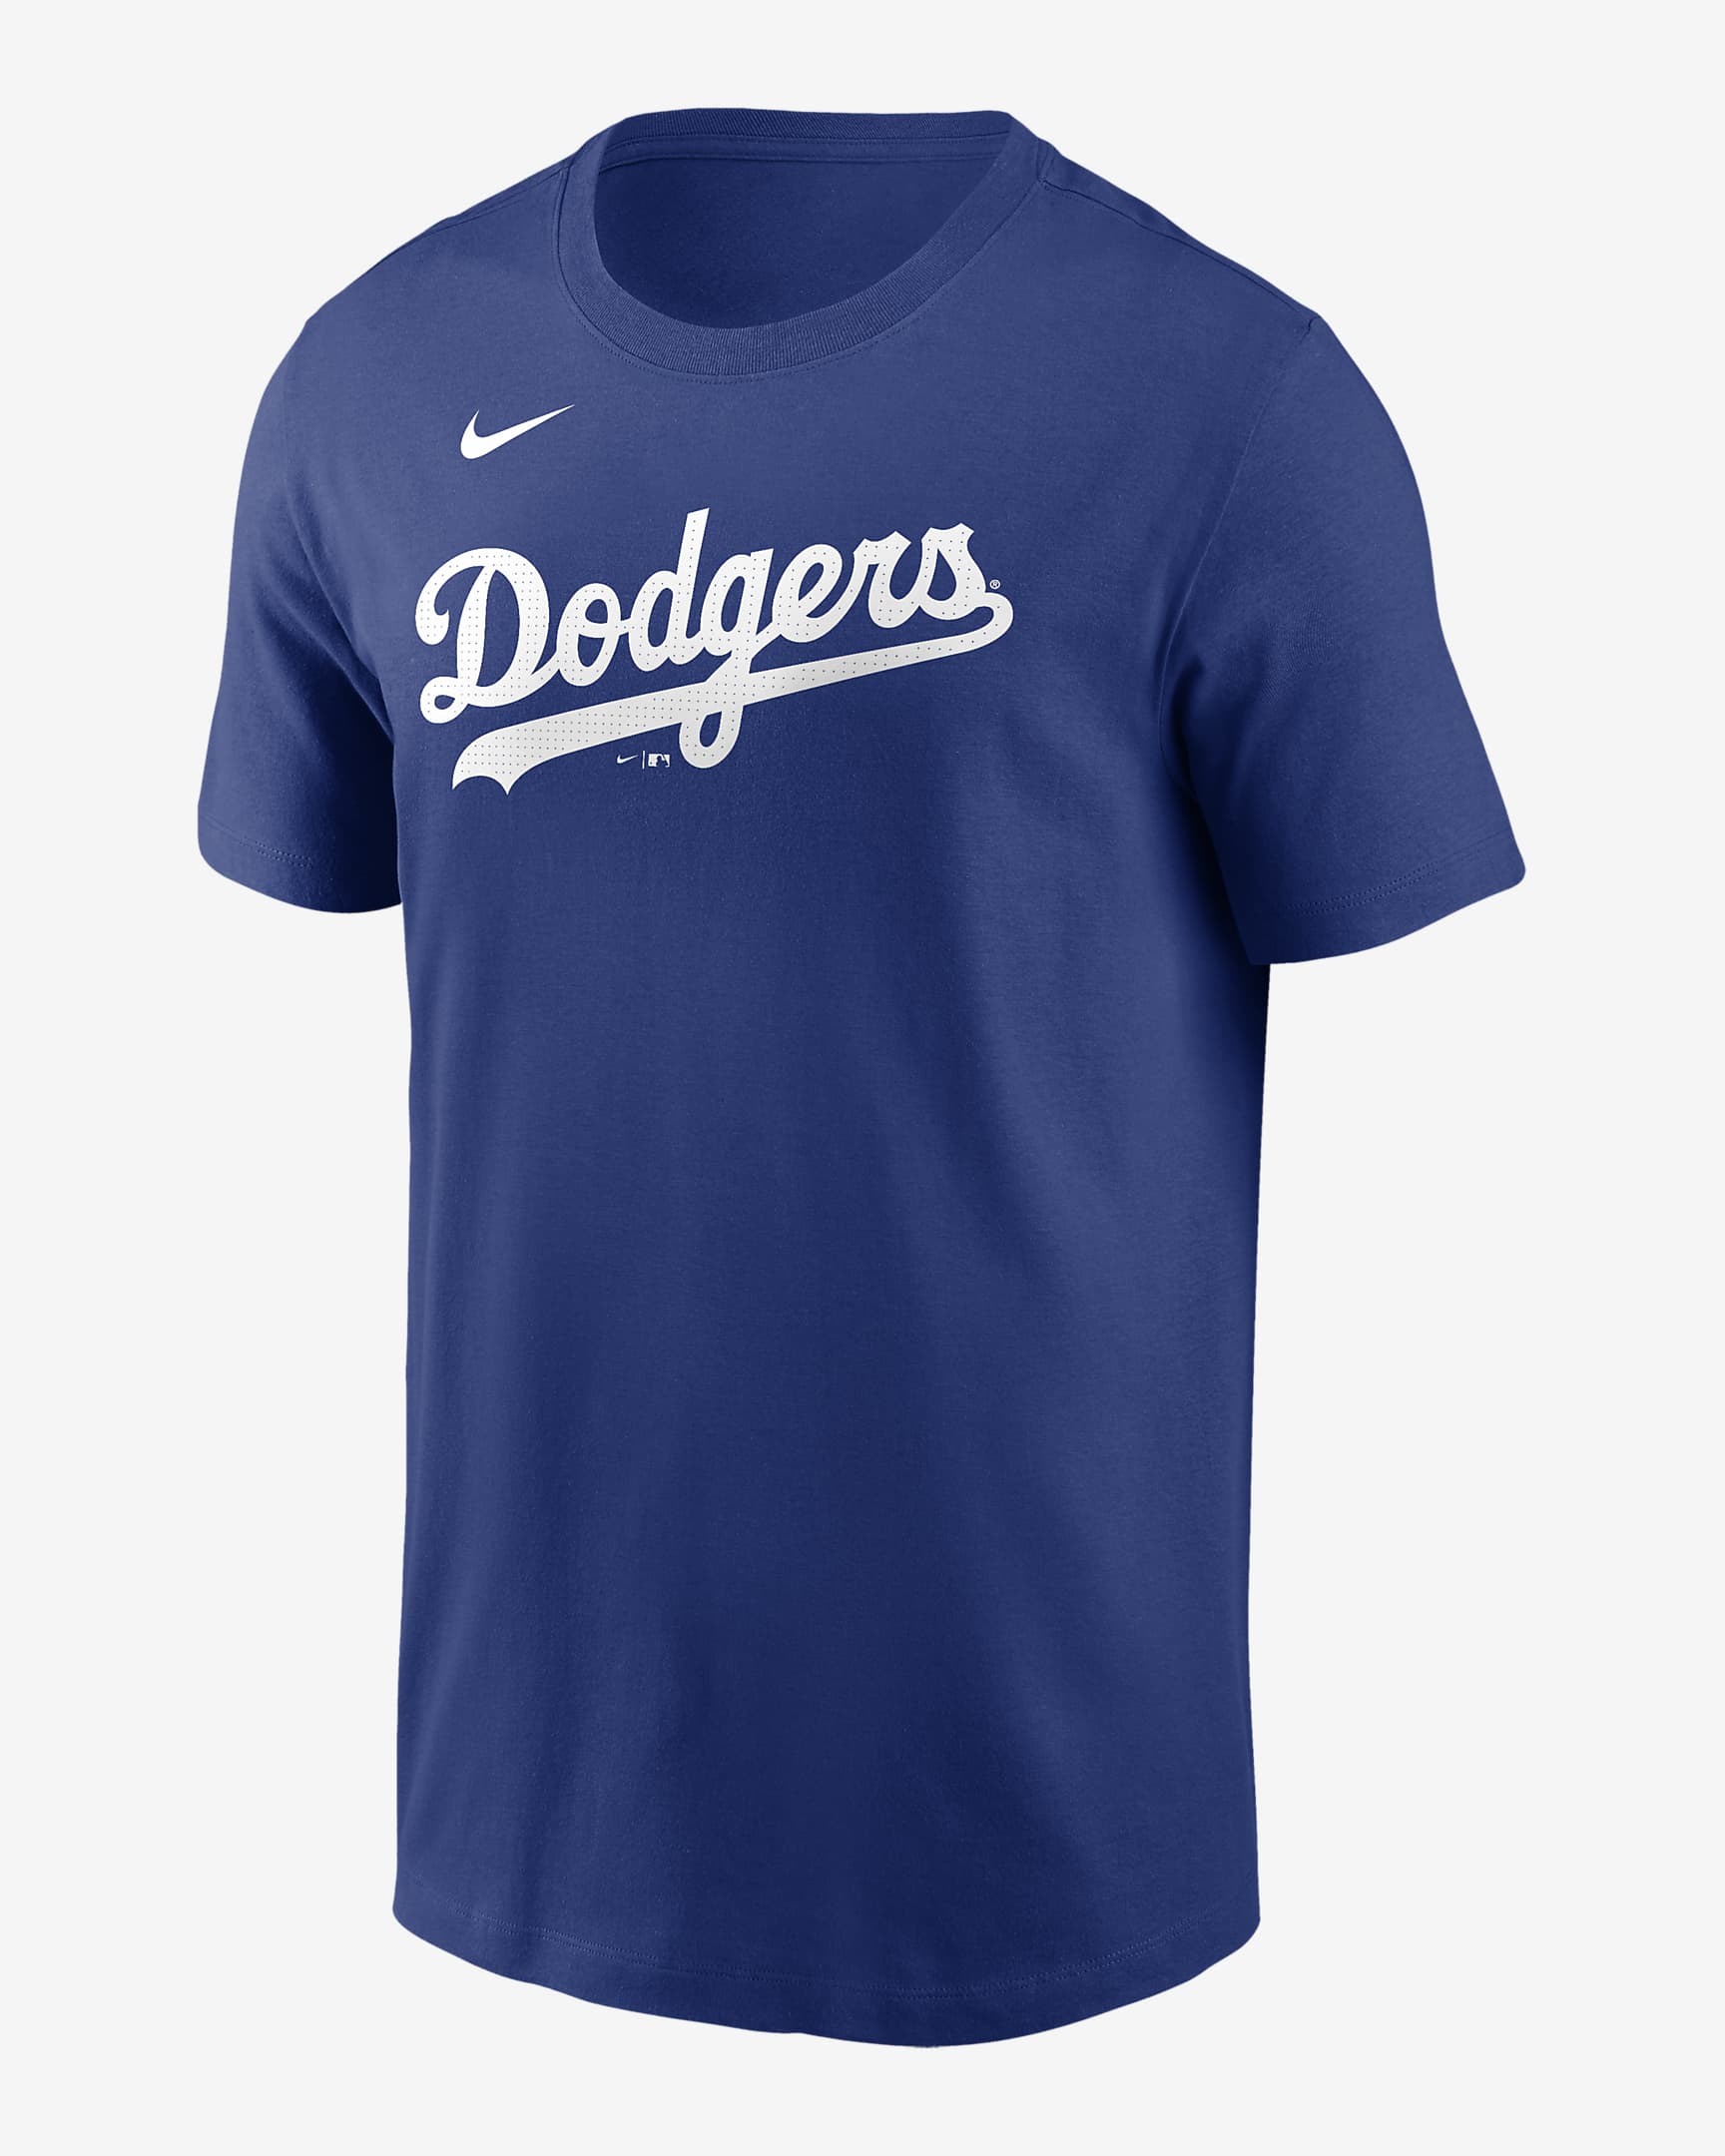 Shohei Ohtani Los Angeles Dodgers Fuse Men's Nike MLB TShirt.